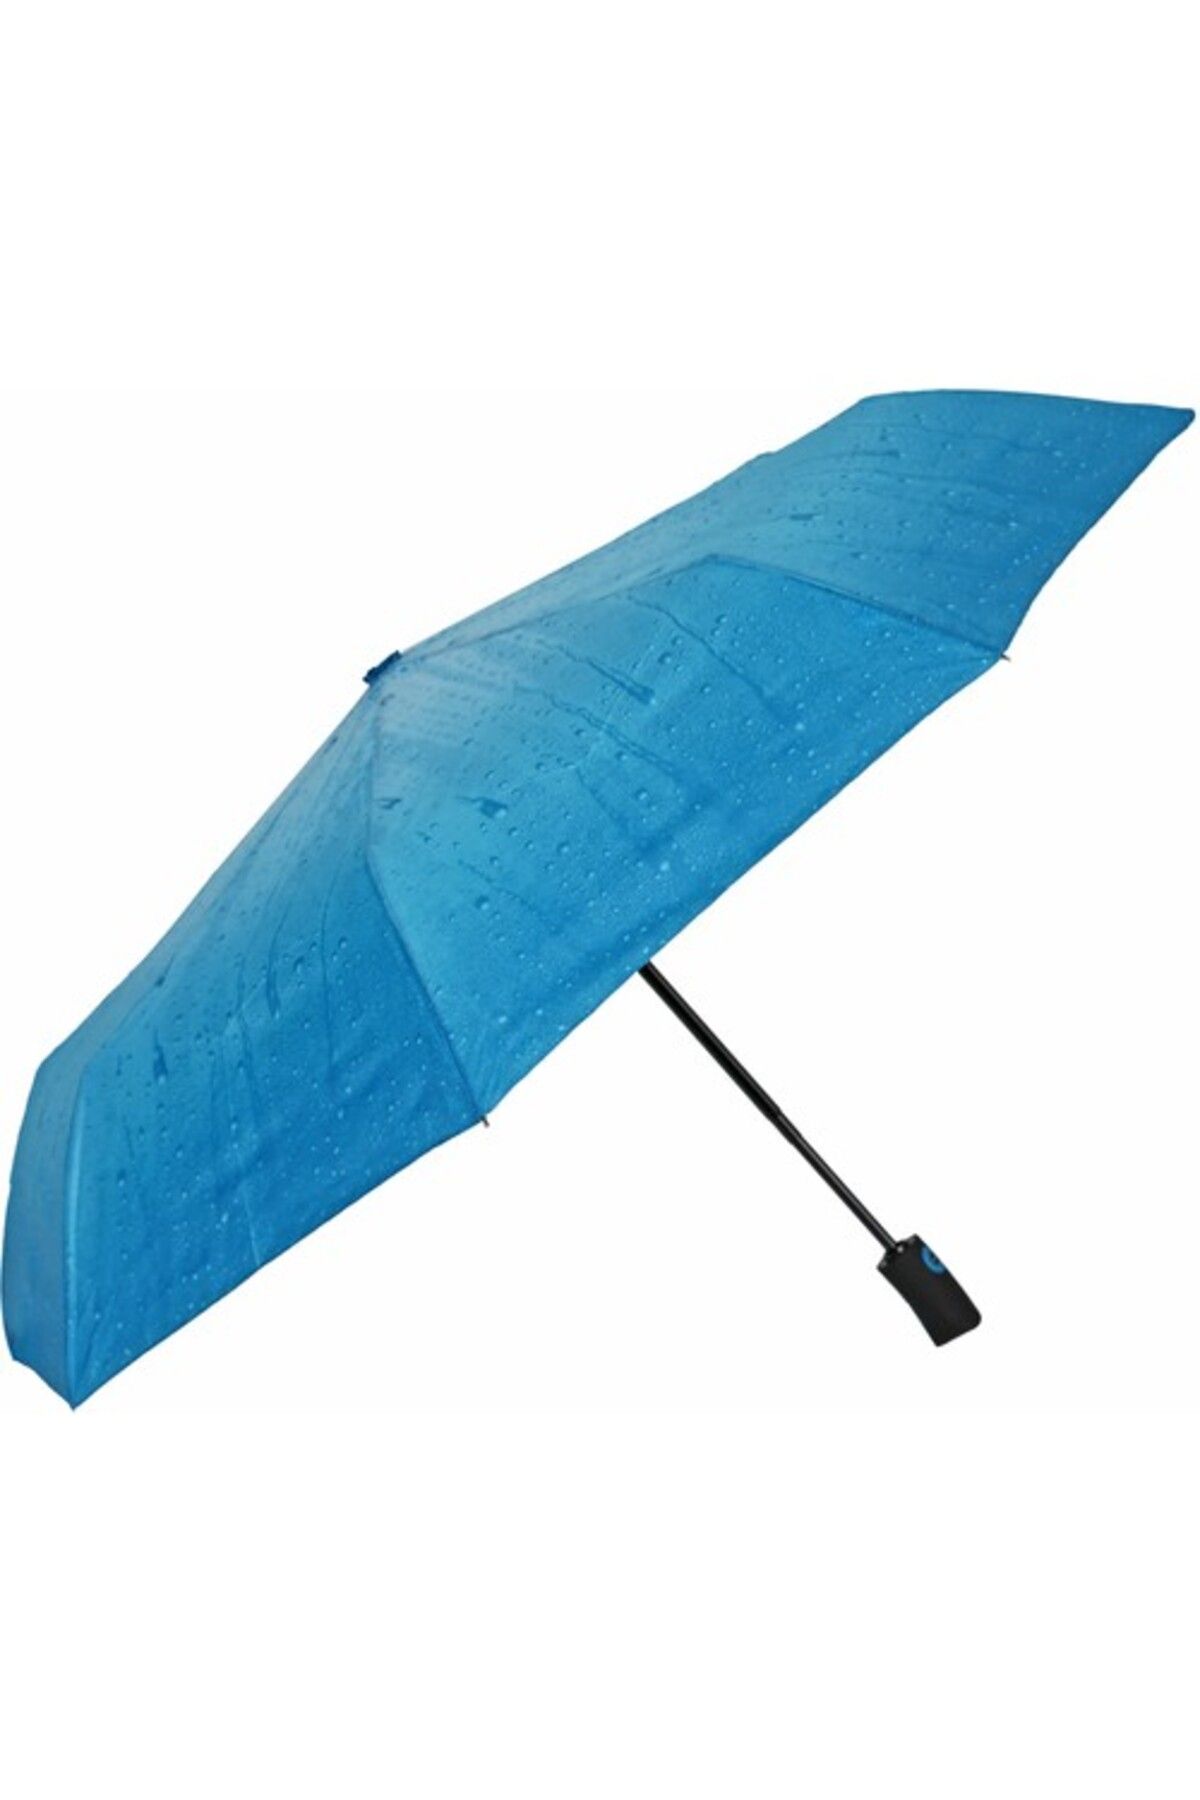 ELEVEN MARKETS Umbrella Şemsiye Su Damlası Tema